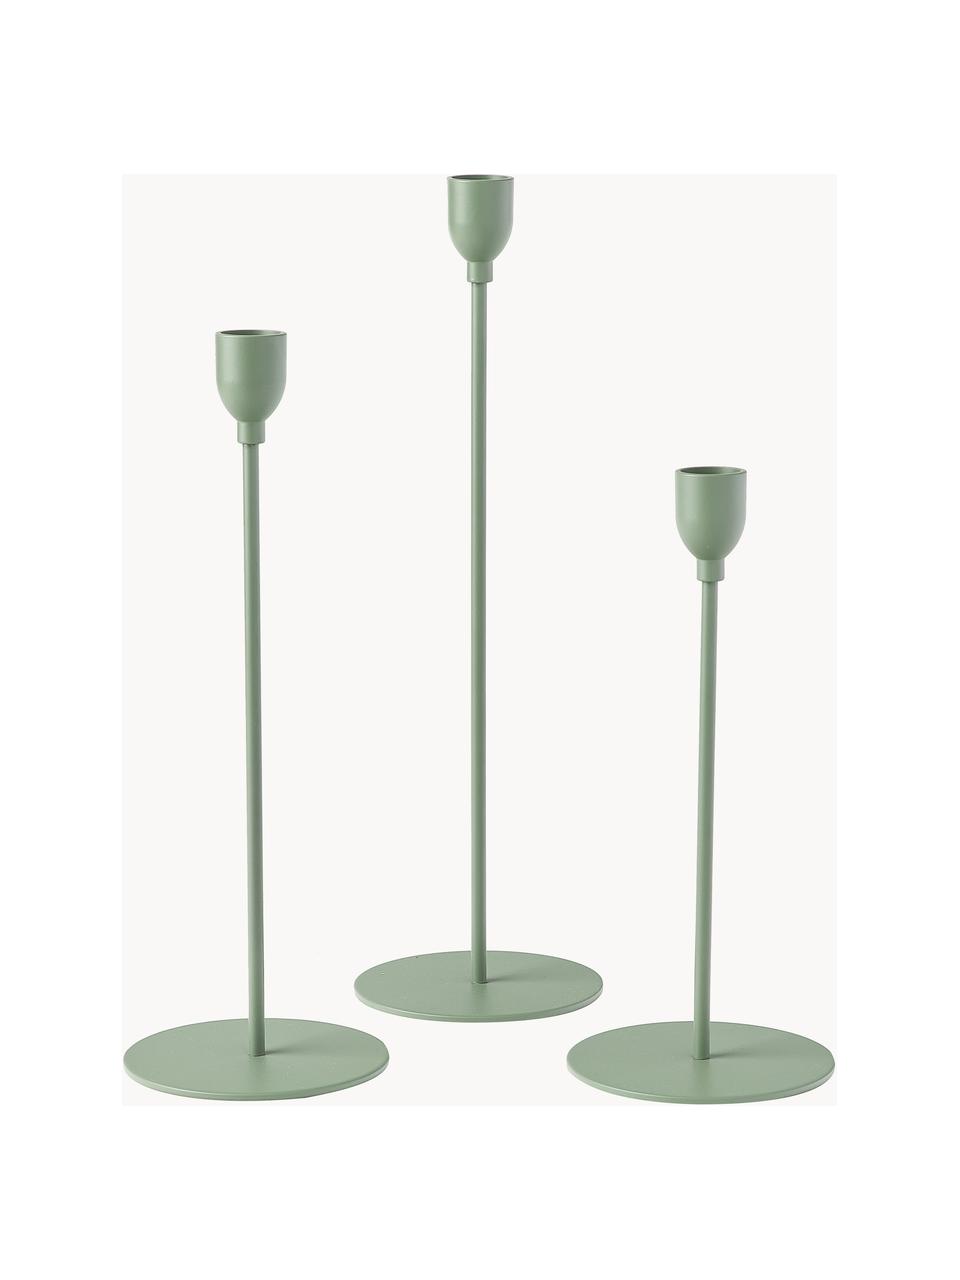 Kerzenhalter-Set Malte, 3er-Set, Metall, beschichtet, Grün, Set mit verschiedenen Größen